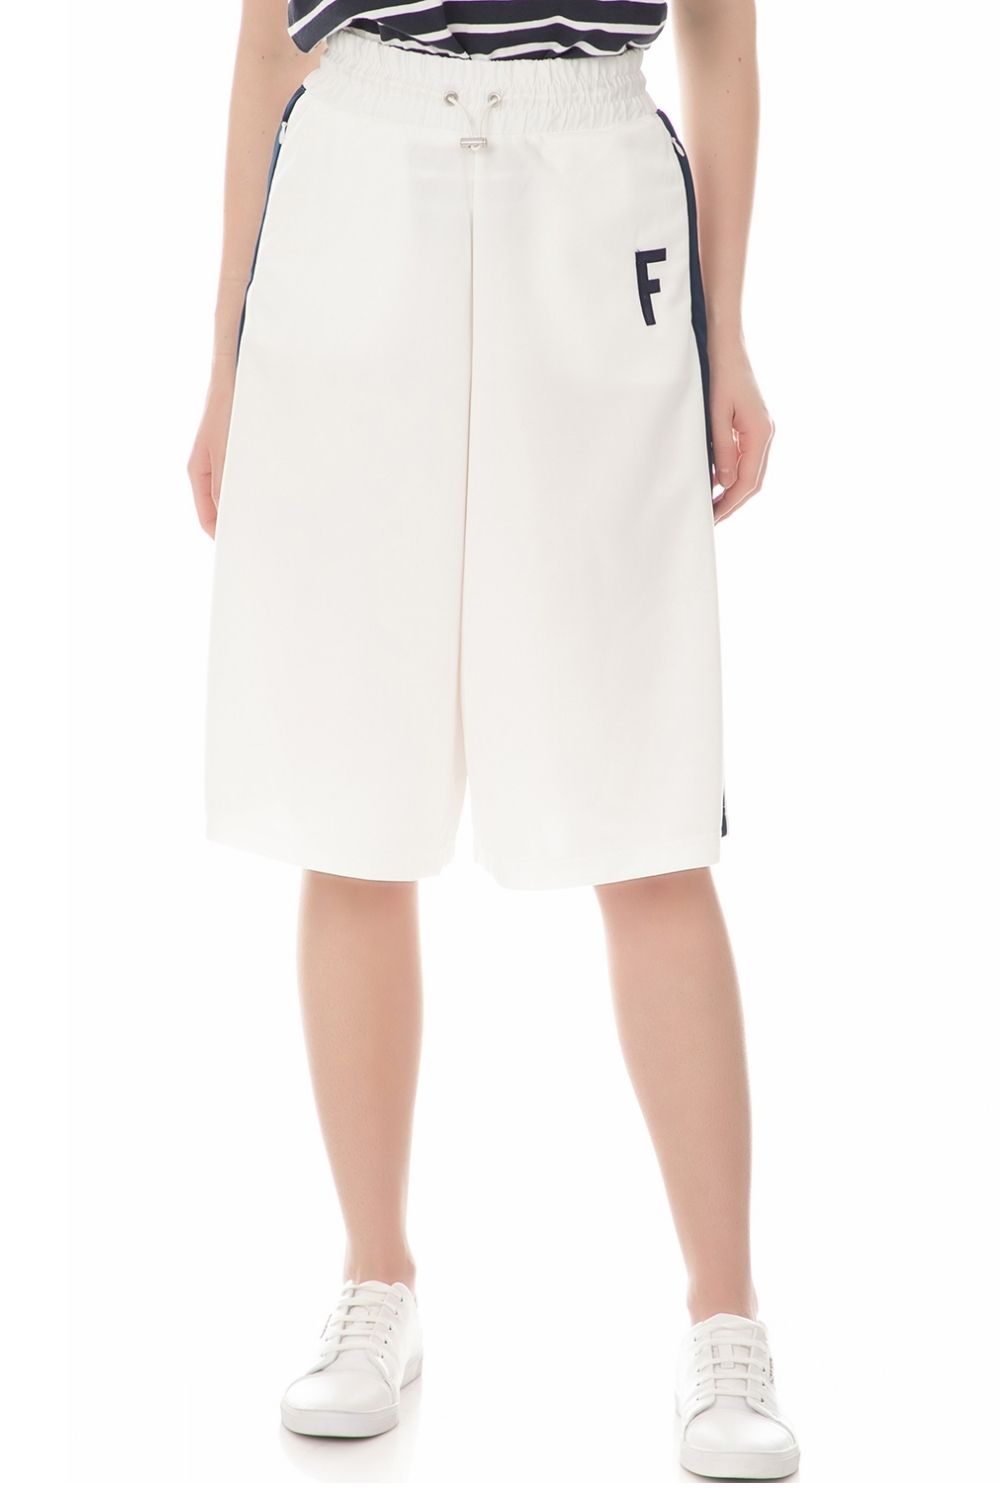 FRANKLIN & MARSHALL – Γυναικειο παντελονι φορμας FRANKLIN & MARSHALL λευκο